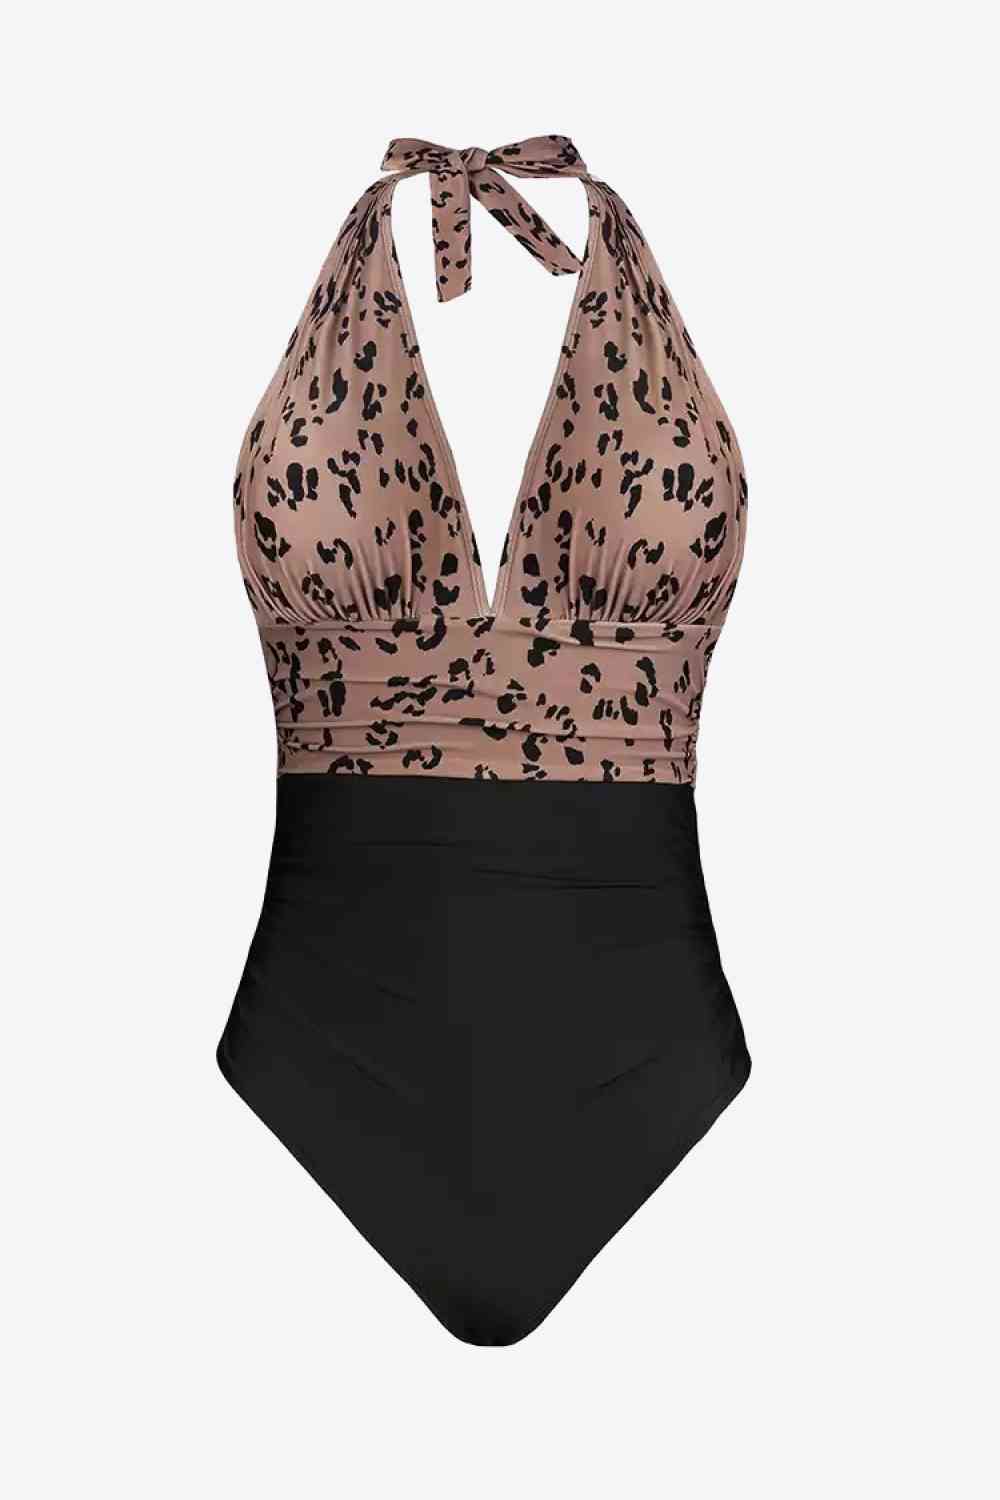 Black Leopard Halter Neck One-Piece Swimsuit Trends